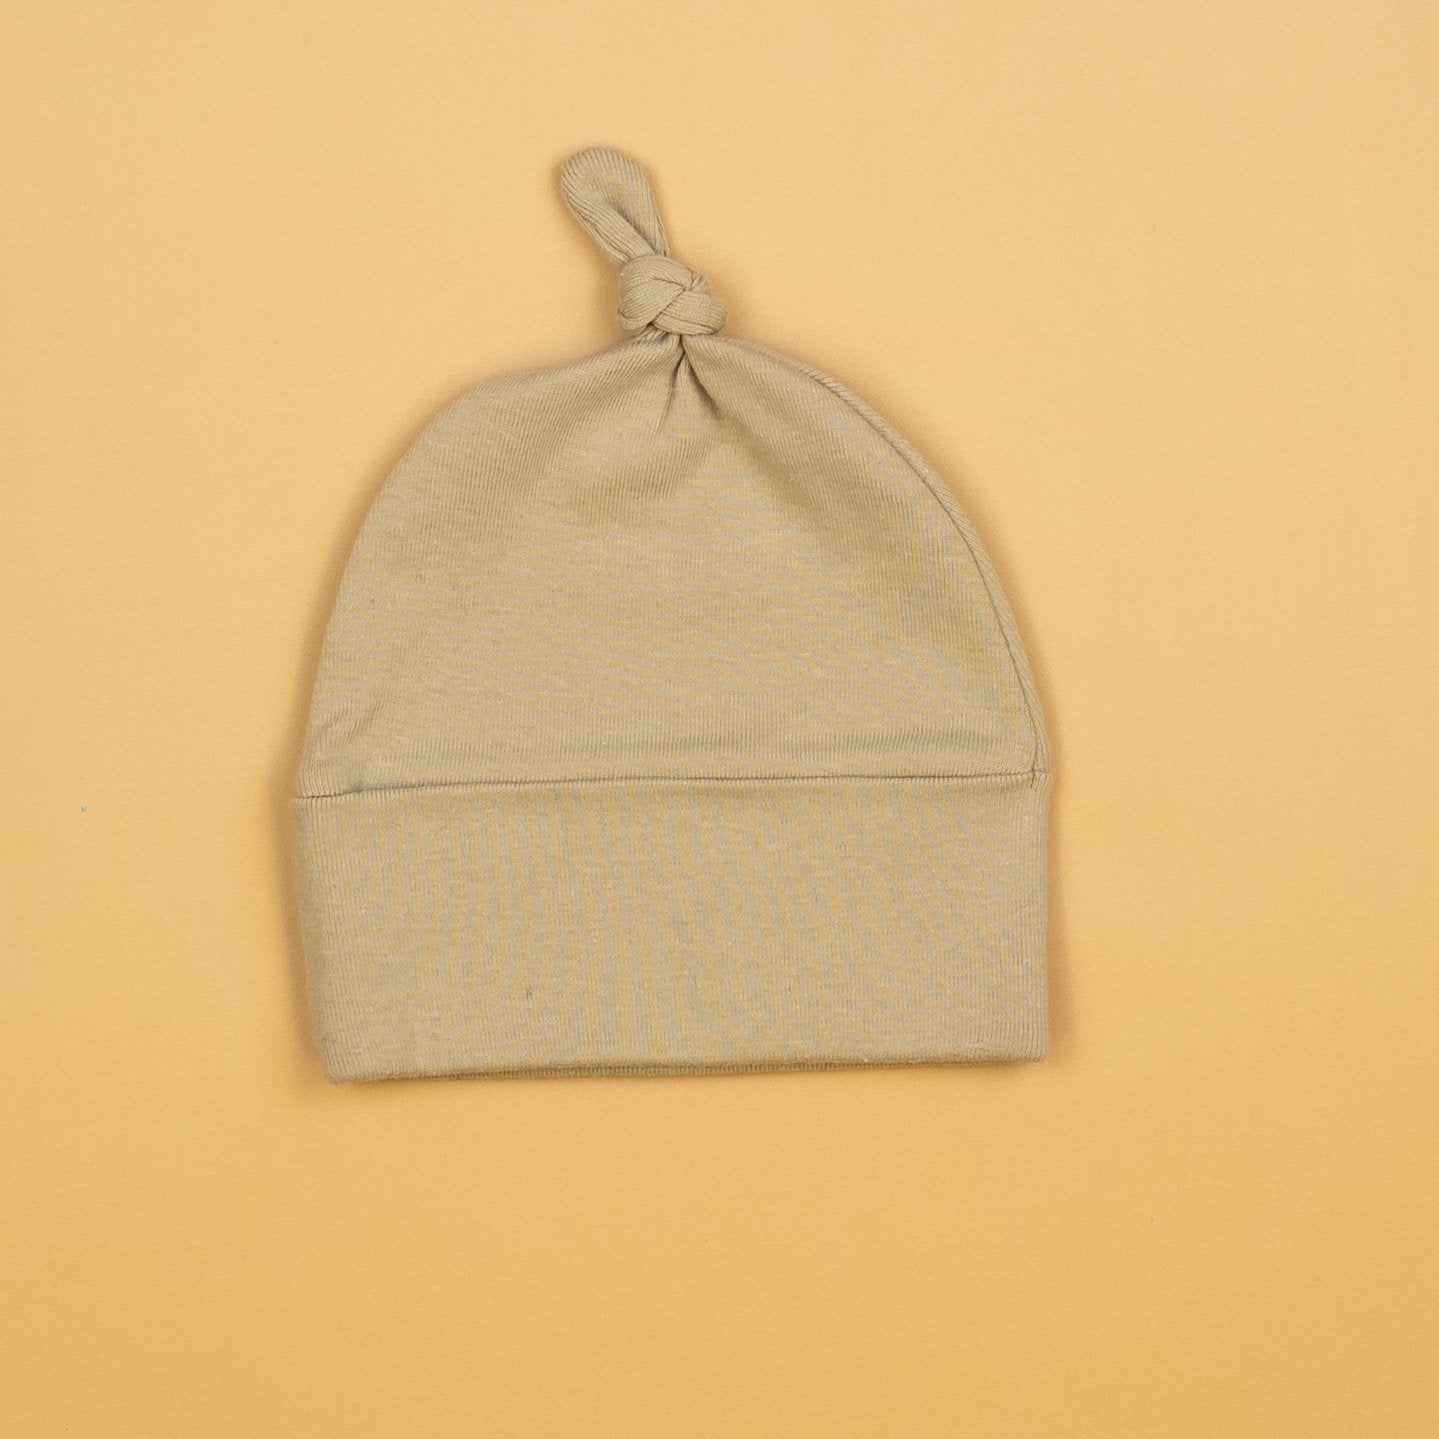 Cuddle Sleep Dream Knot Hat Small (0-3m) Tan/Khaki Knot Hat